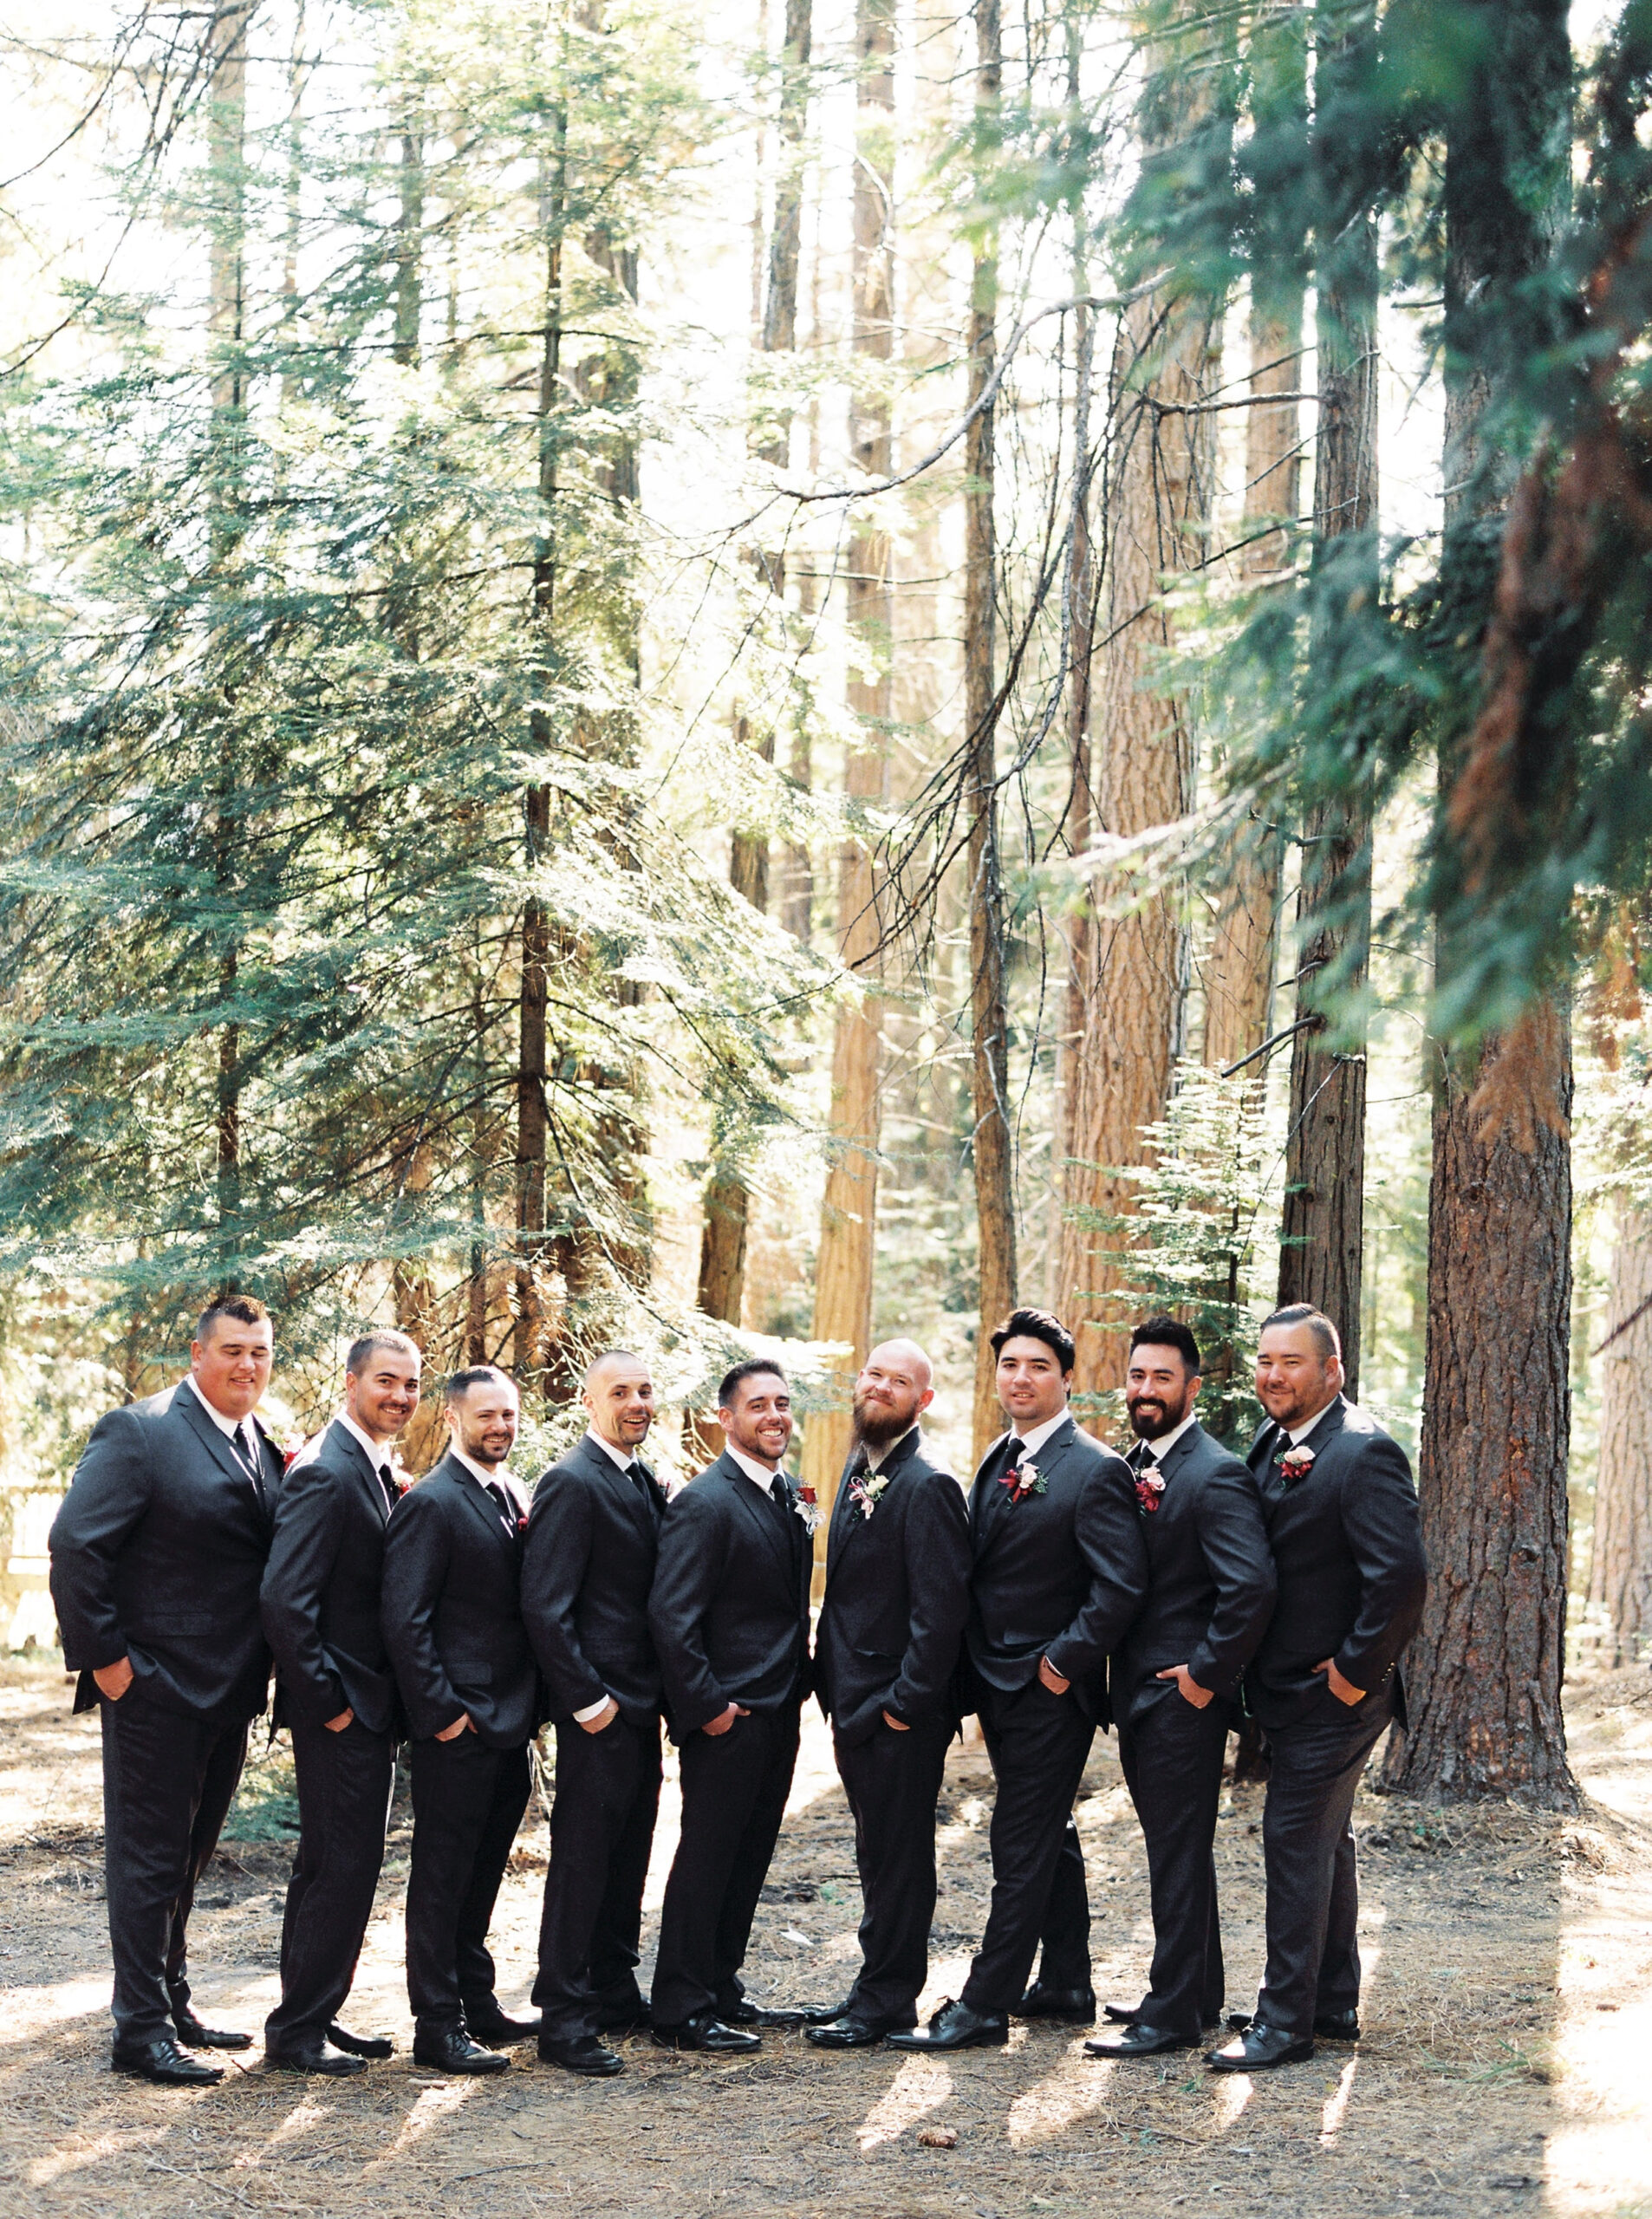 Tenaya-lodge-wedding-at-yosemite-national-park-california-95.jpg